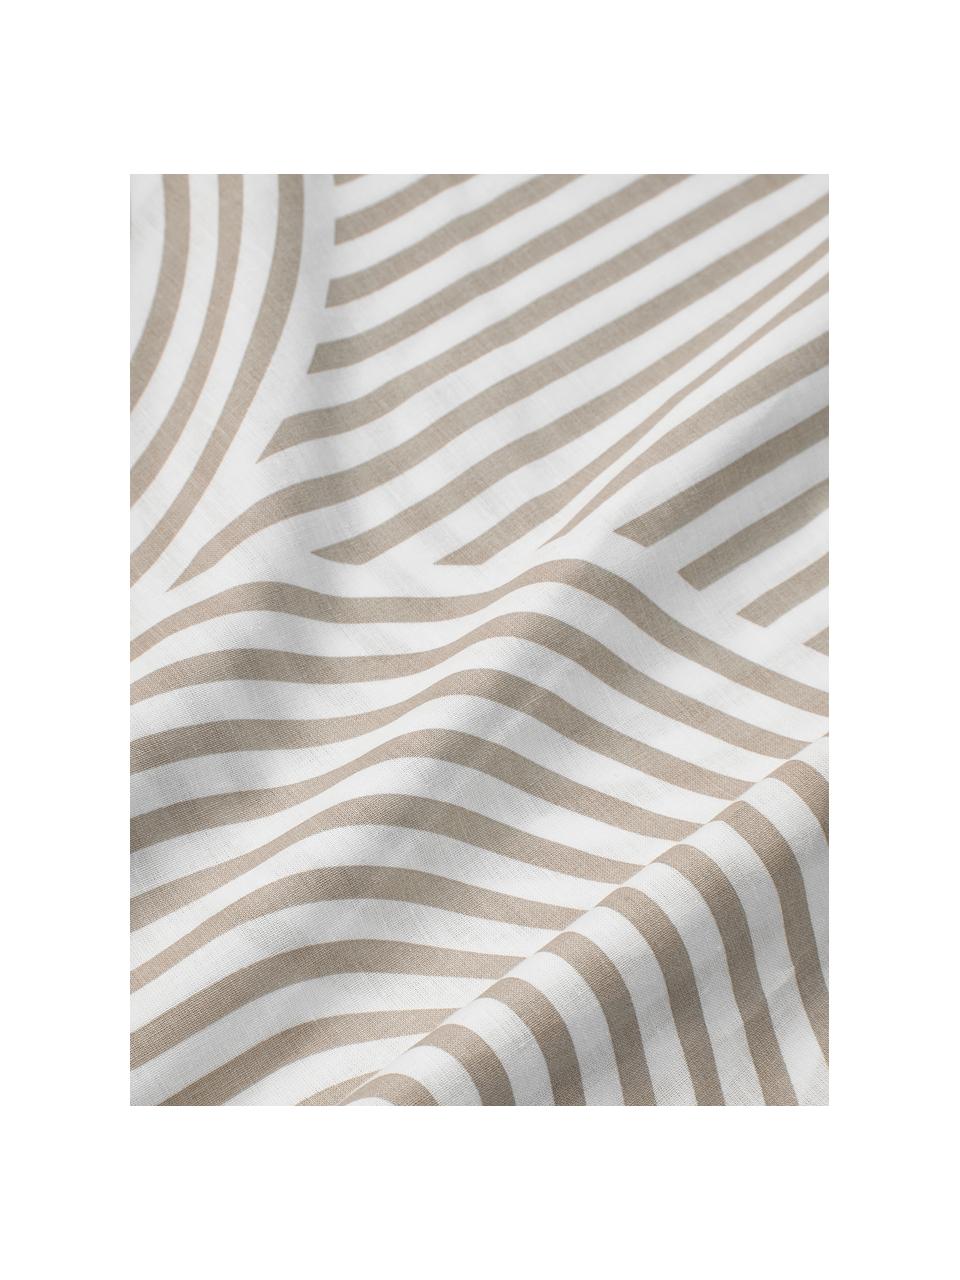 Baumwoll-Kopfkissenbezug Arcs, Webart: Renforcé Fadendichte 144 , Beige, Weiß, B 40 x L 80 cm